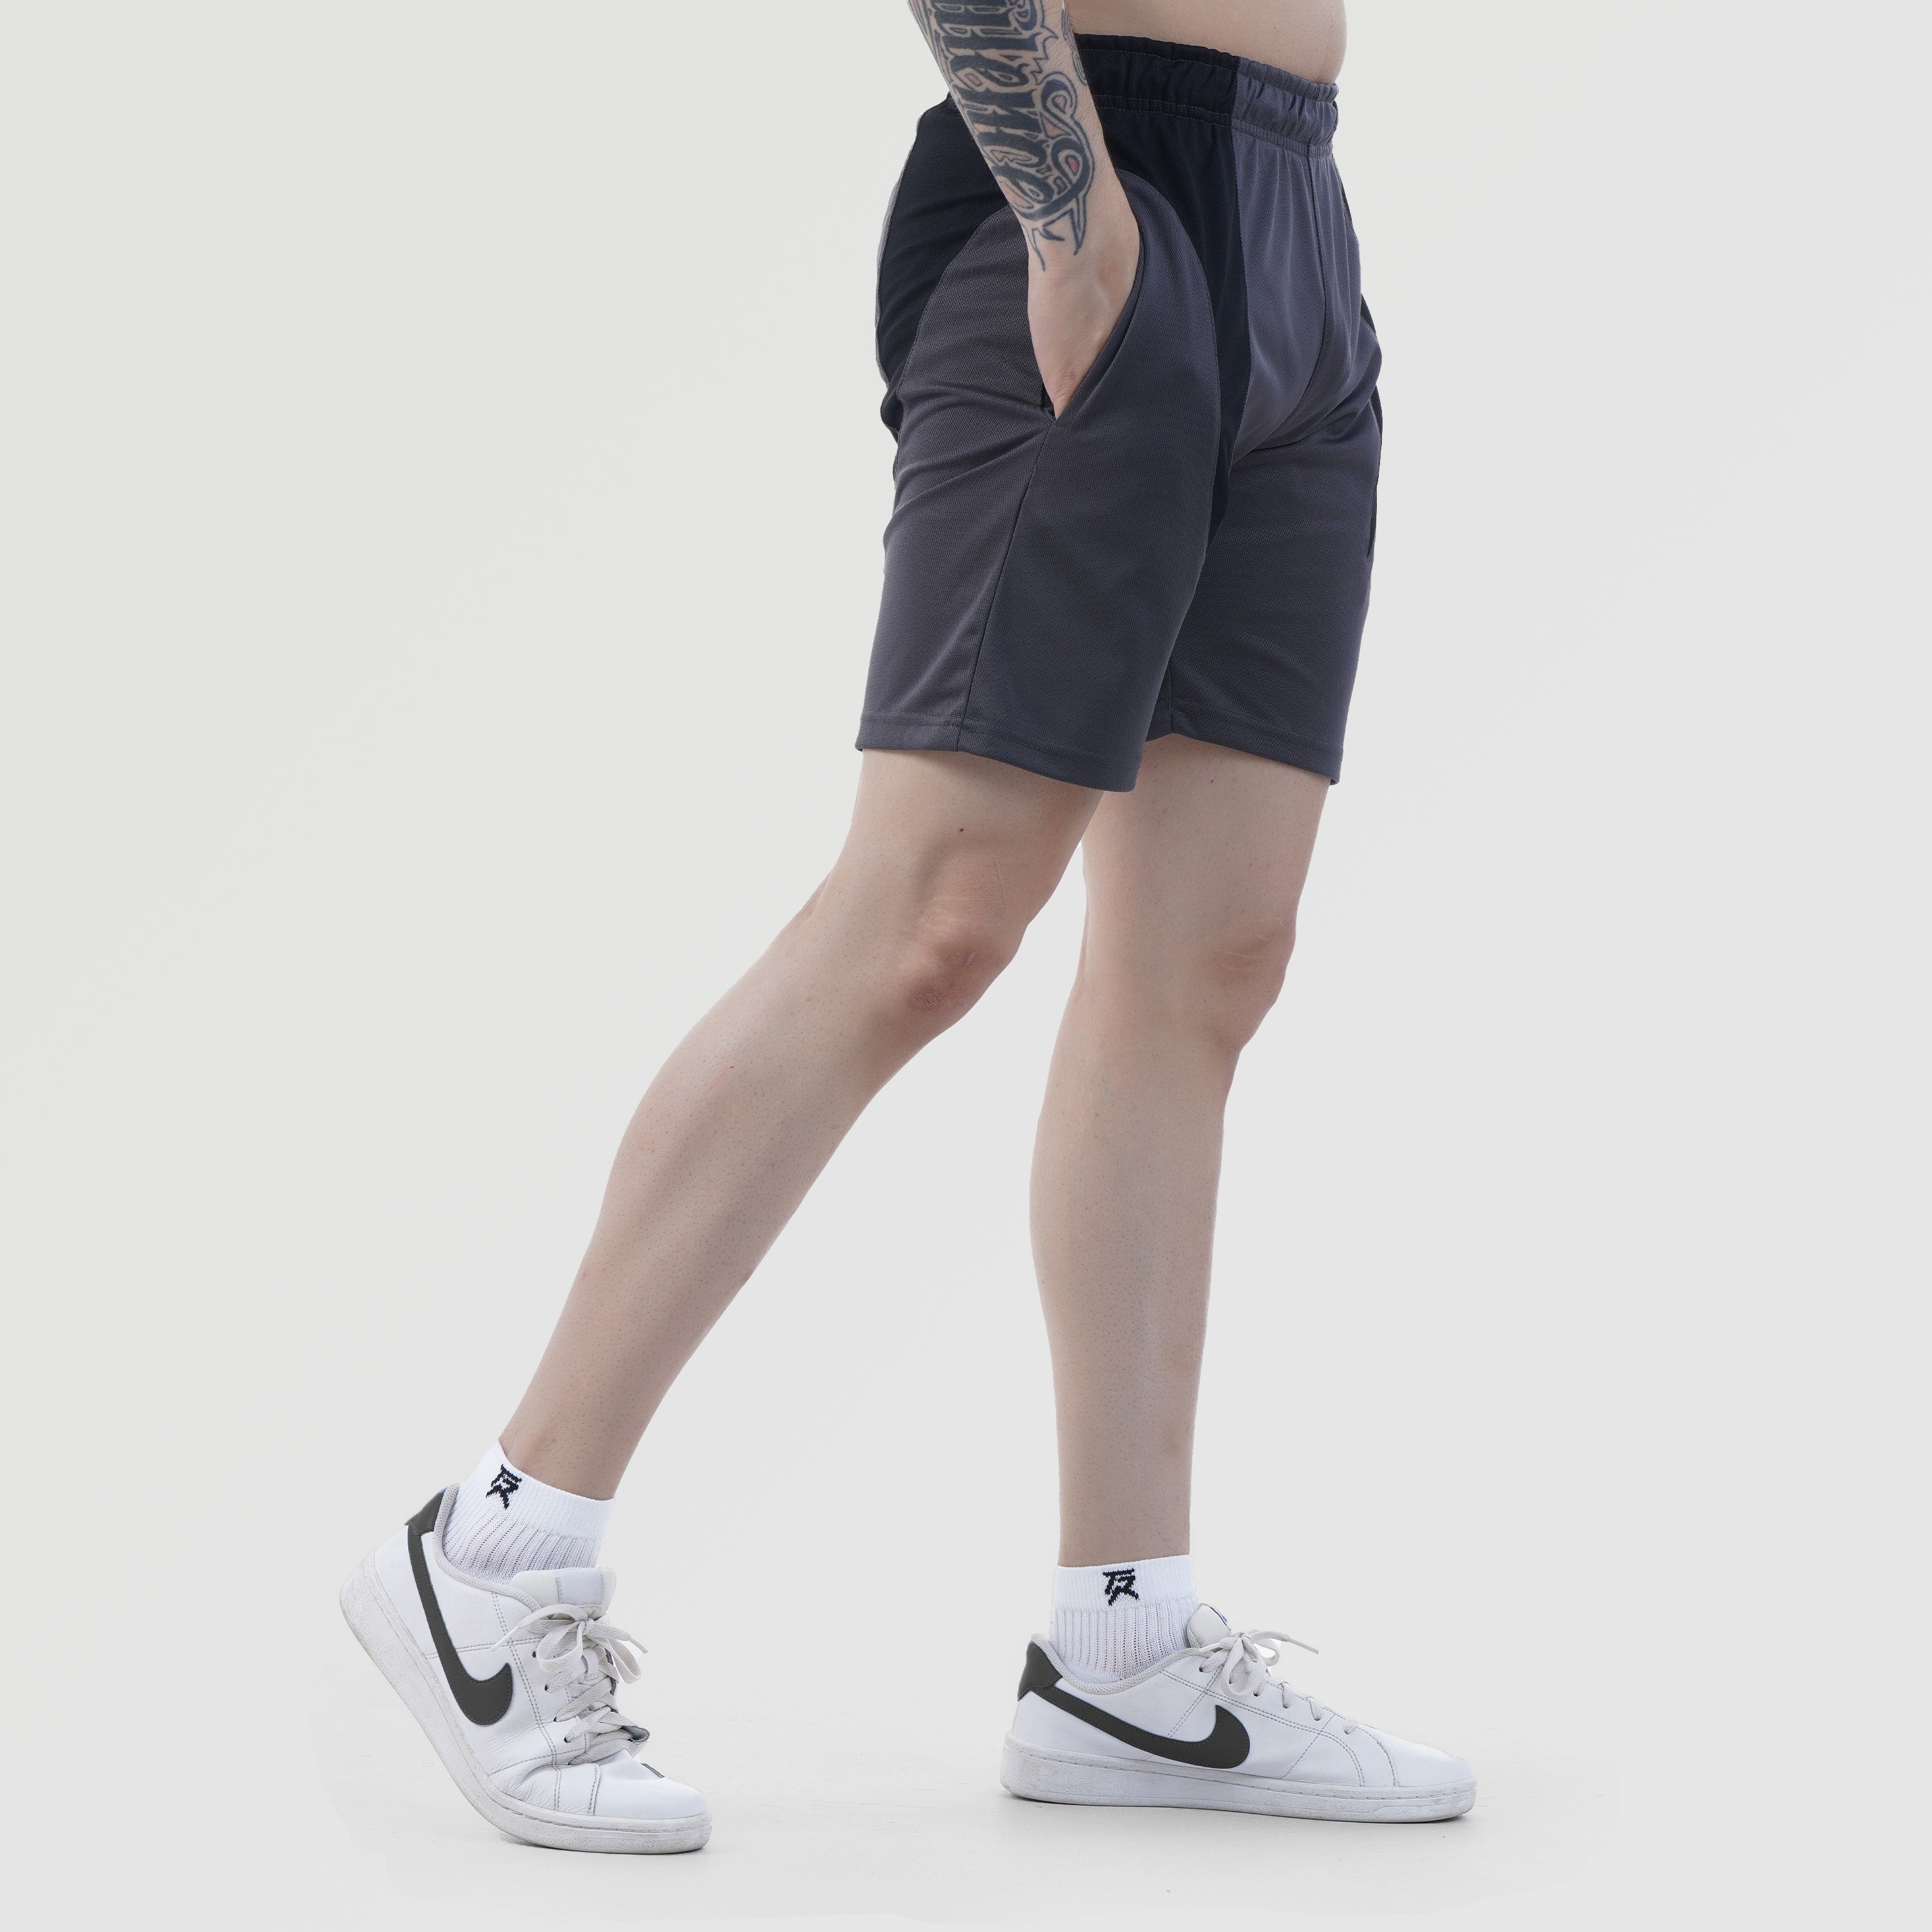 ActiveFlow Shorts (Grey)